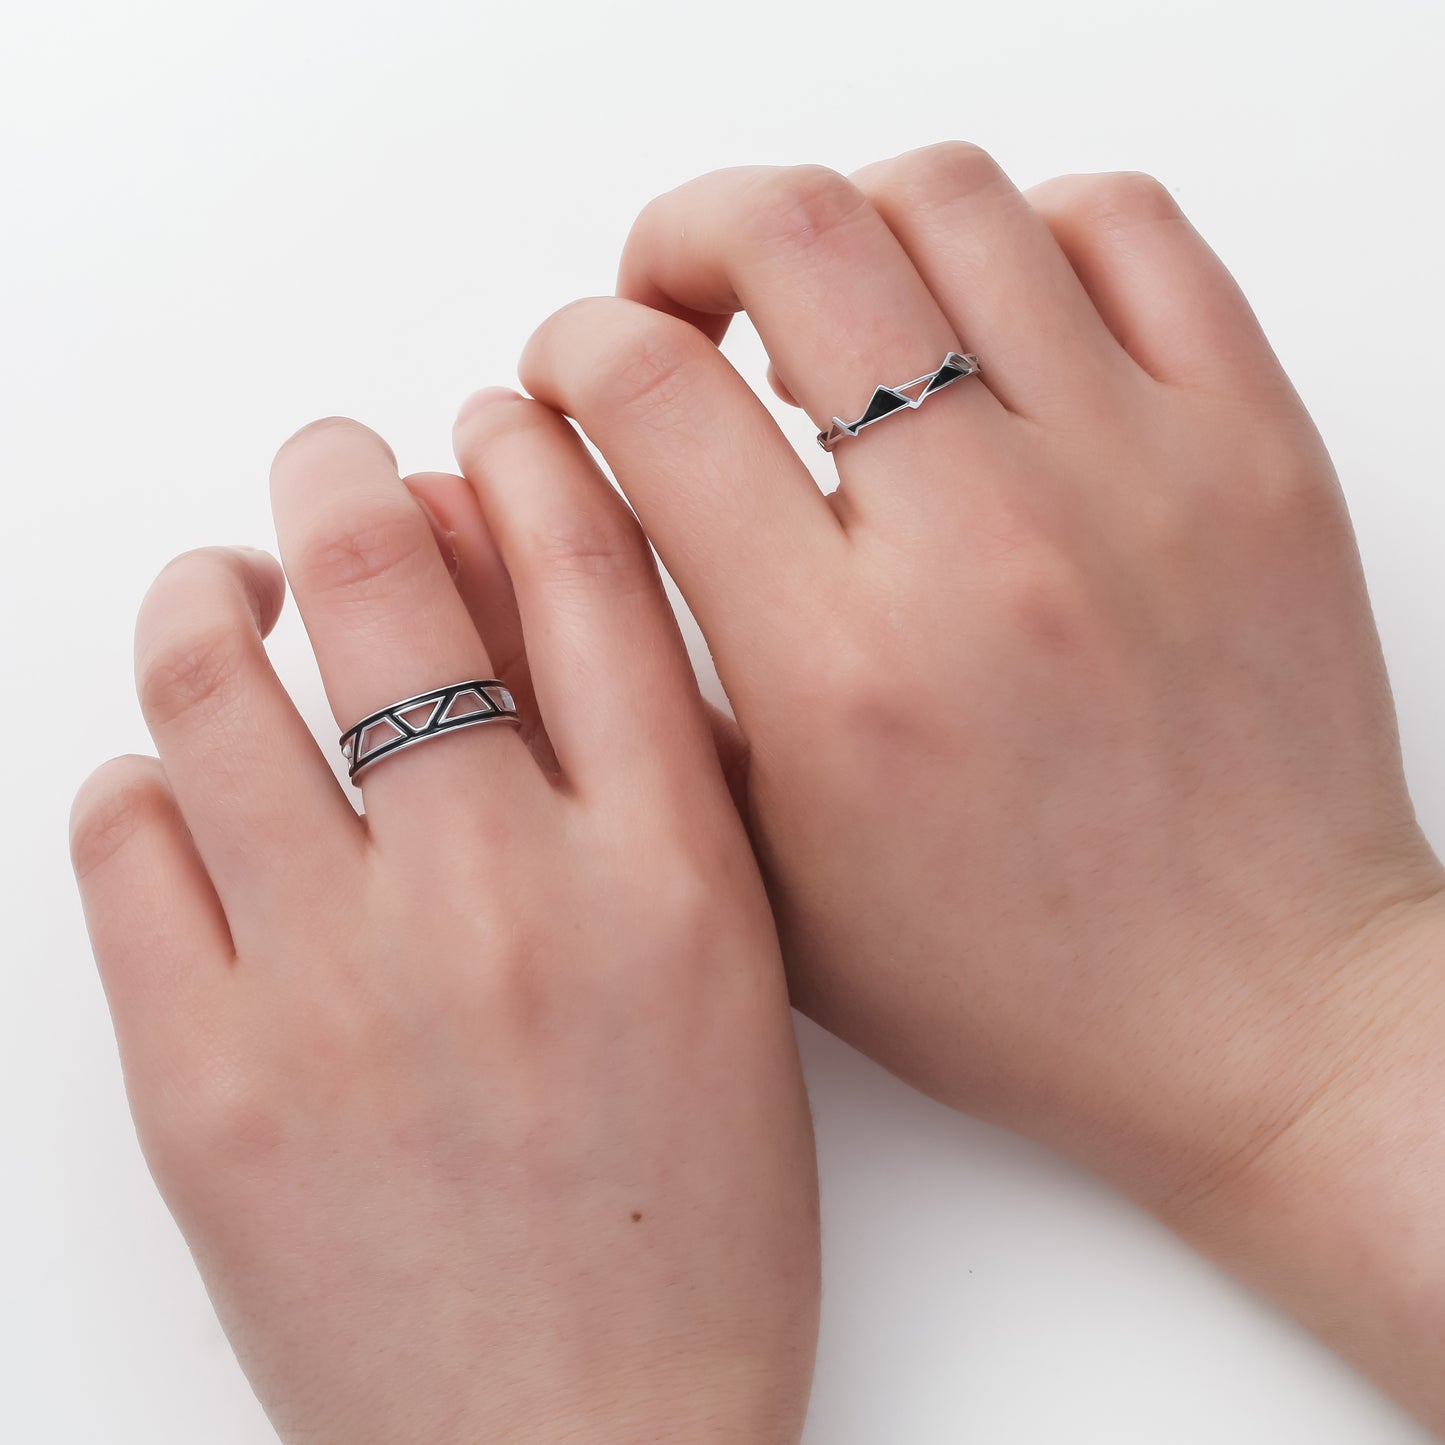 Romantic Engagement Rings | Bridge Rings | Romantic Rings | AVIJEWELRY